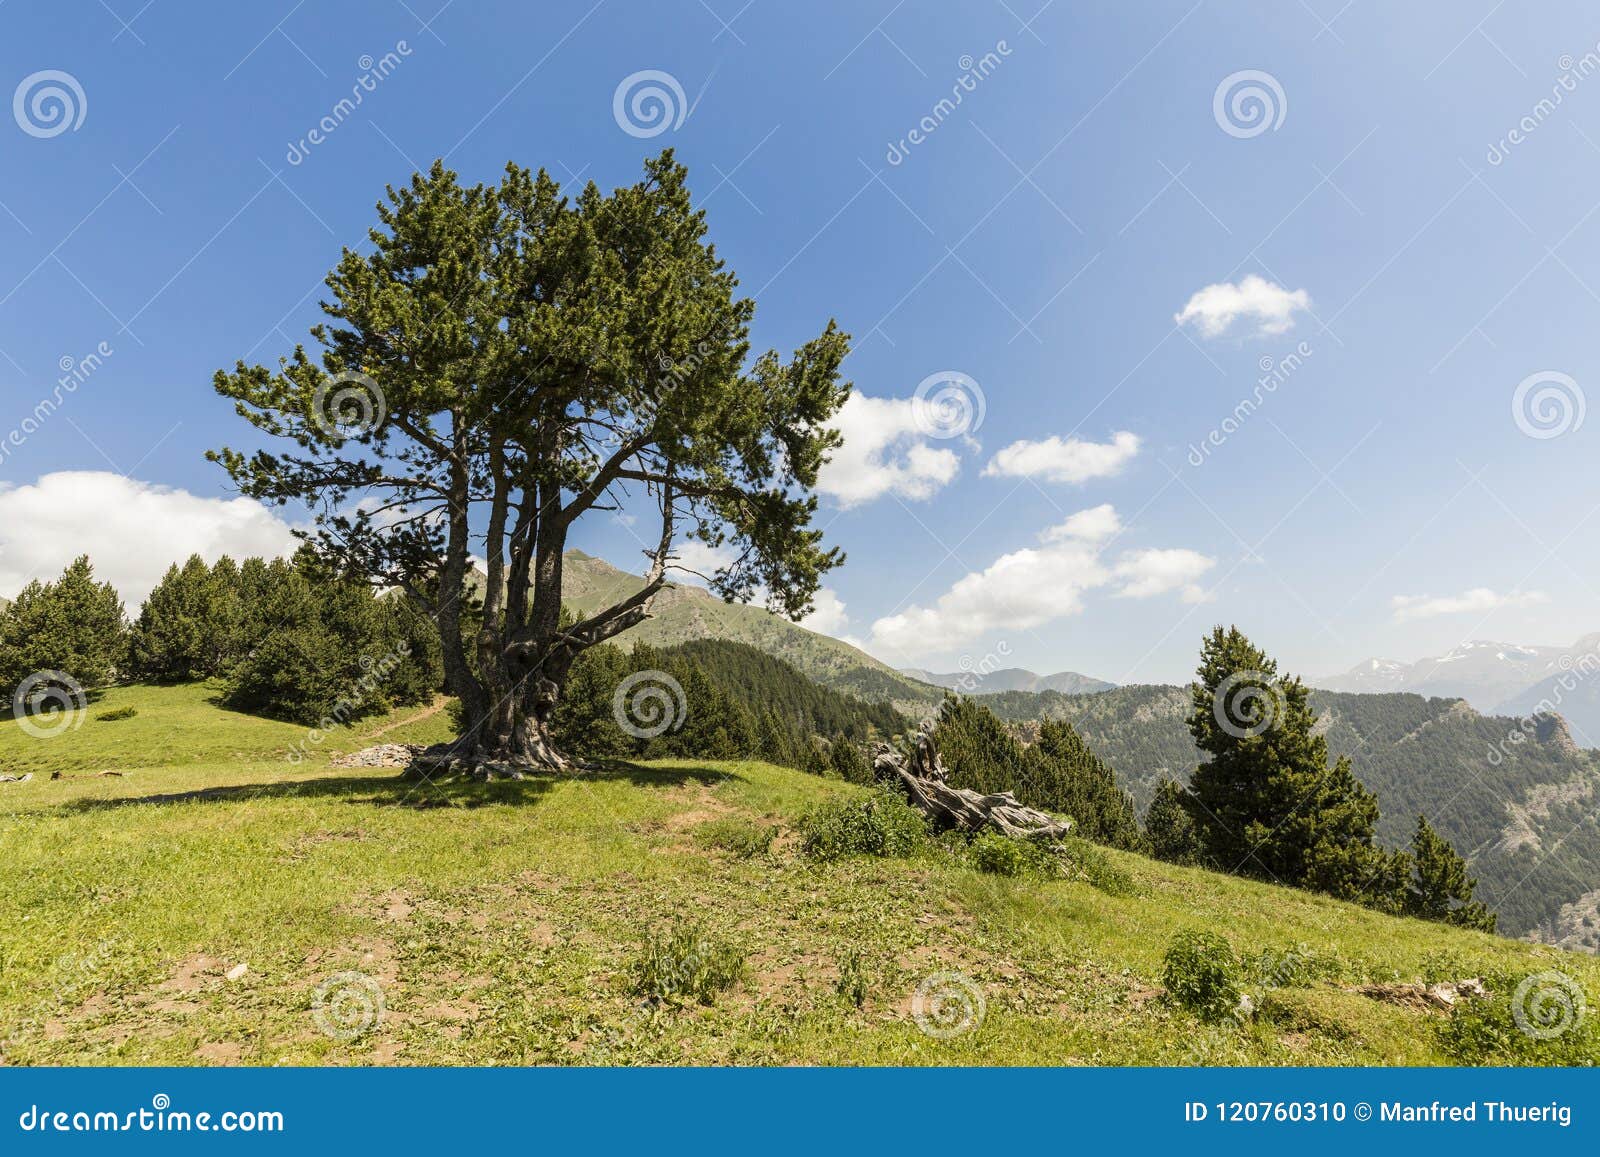 landscape with pine on the coll de la botella in the area pal arisal, andorra